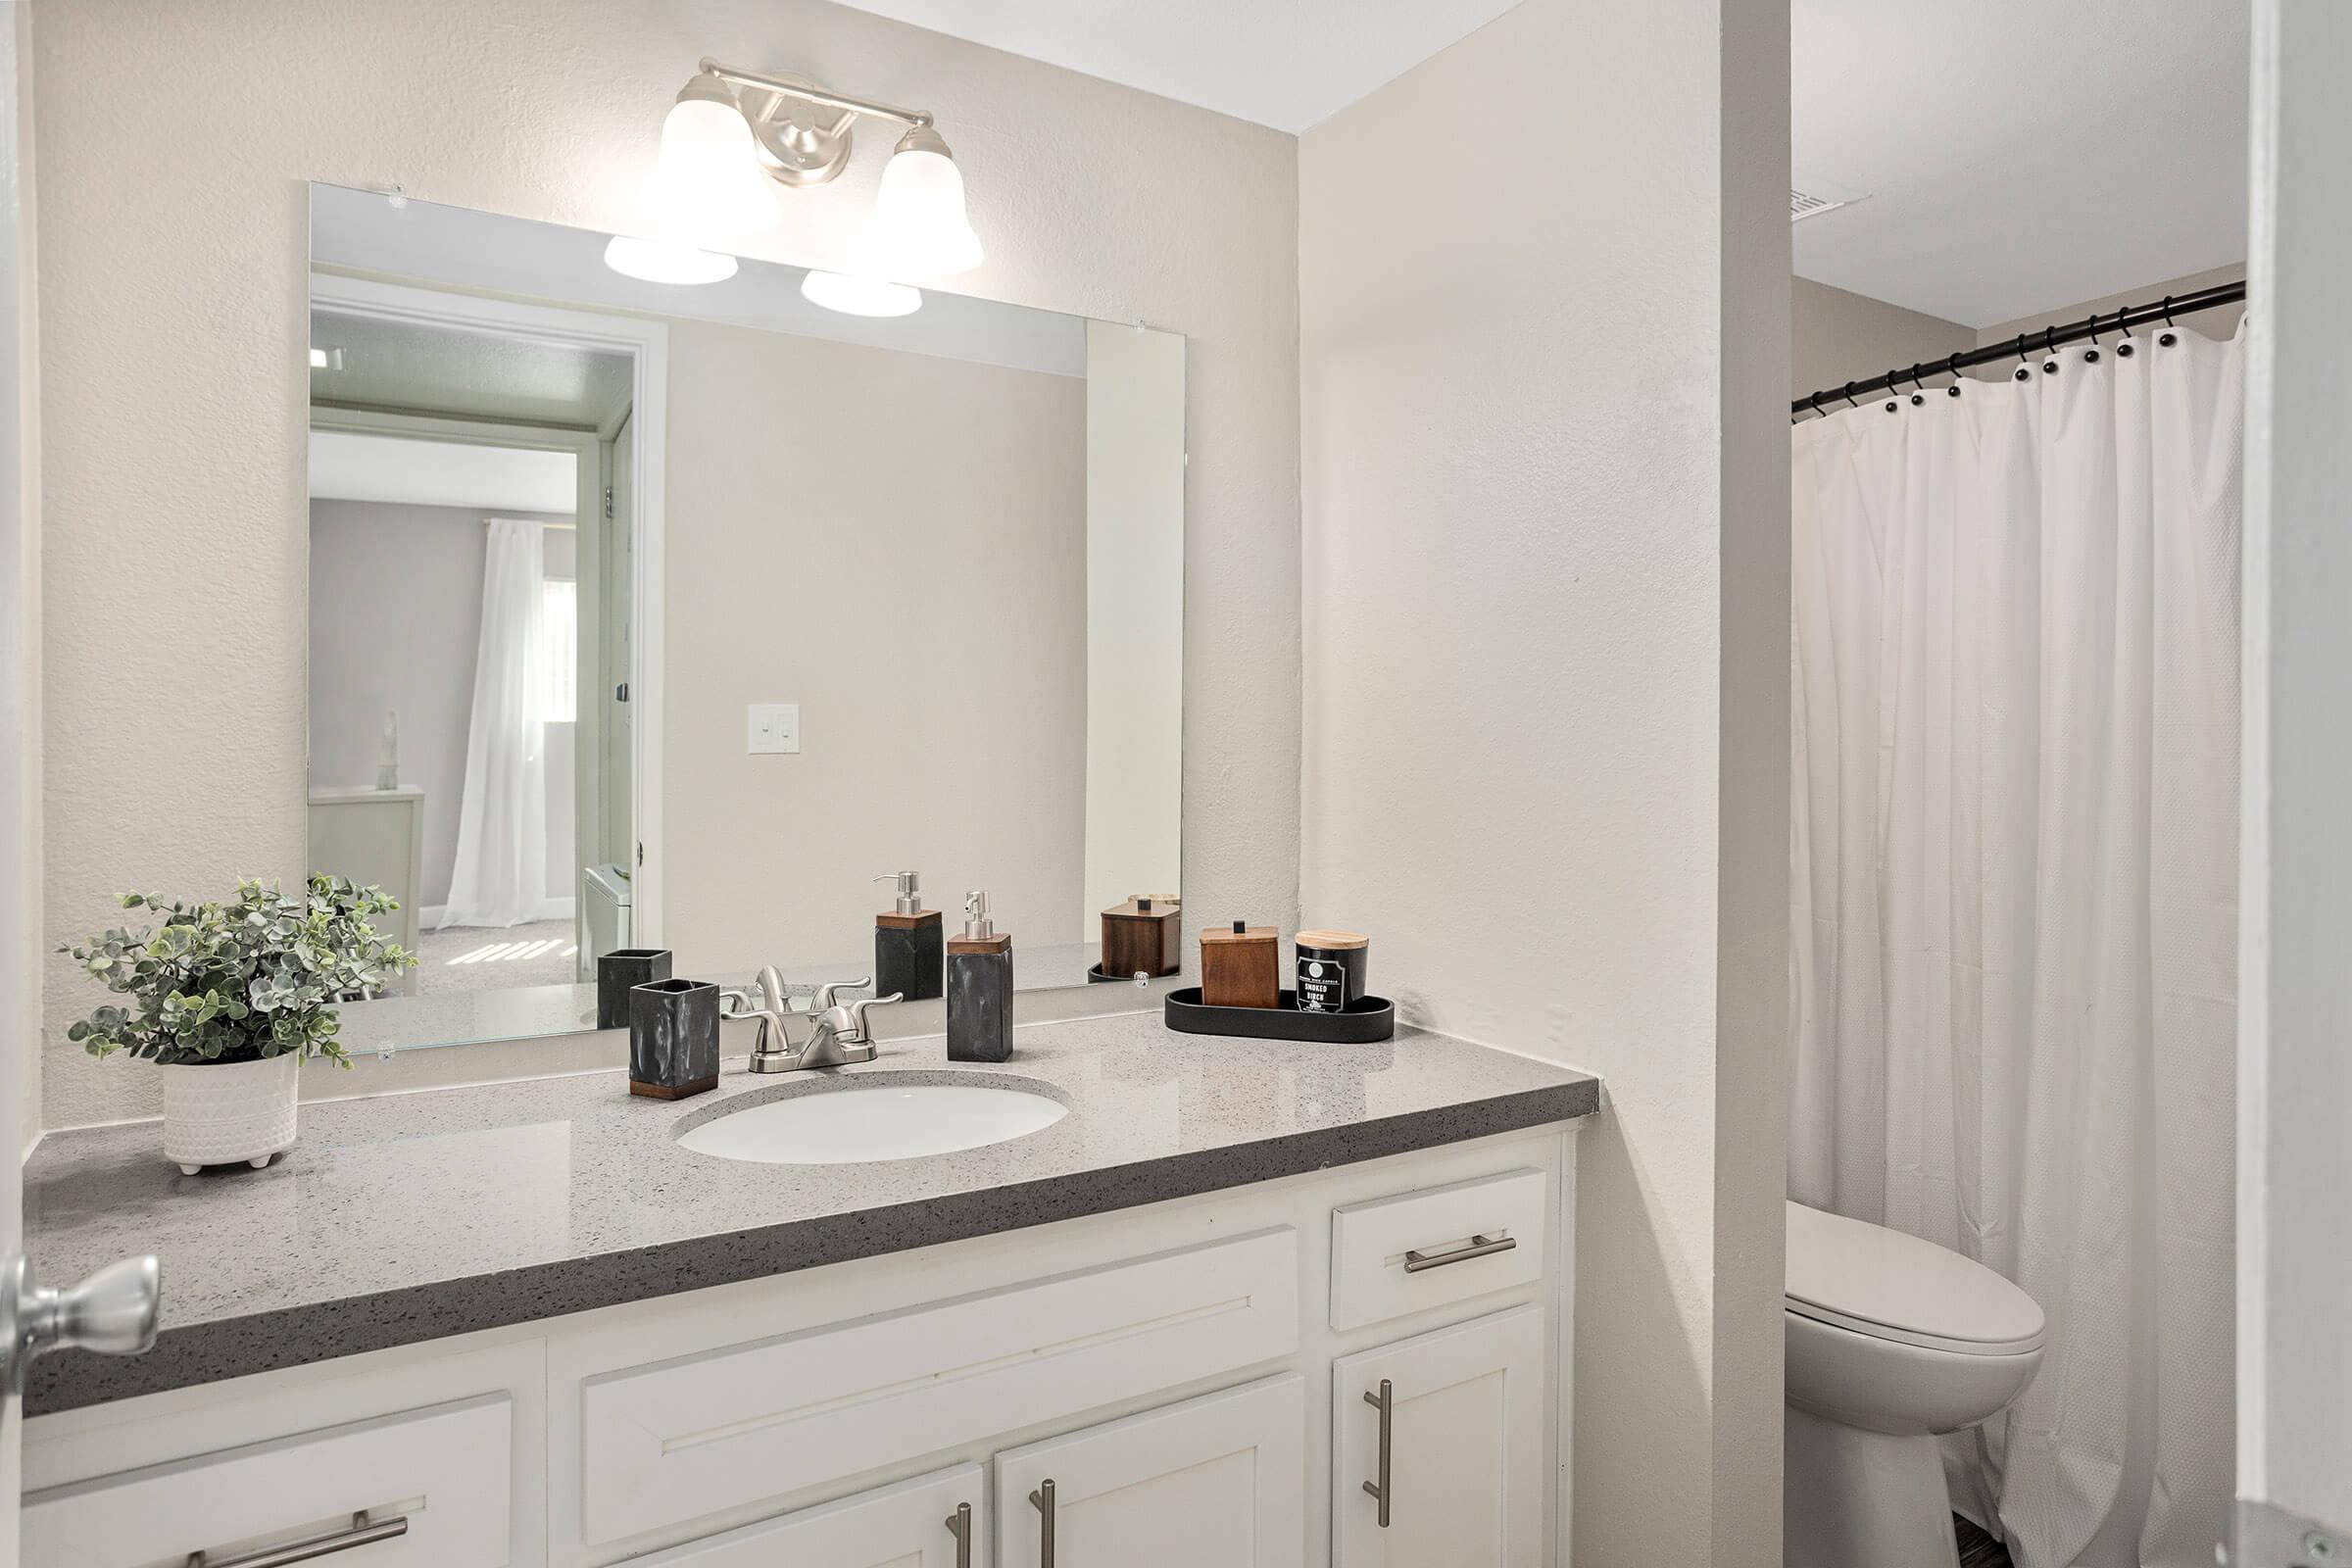 Bathroom quartz countertop vanity with large mirror above.